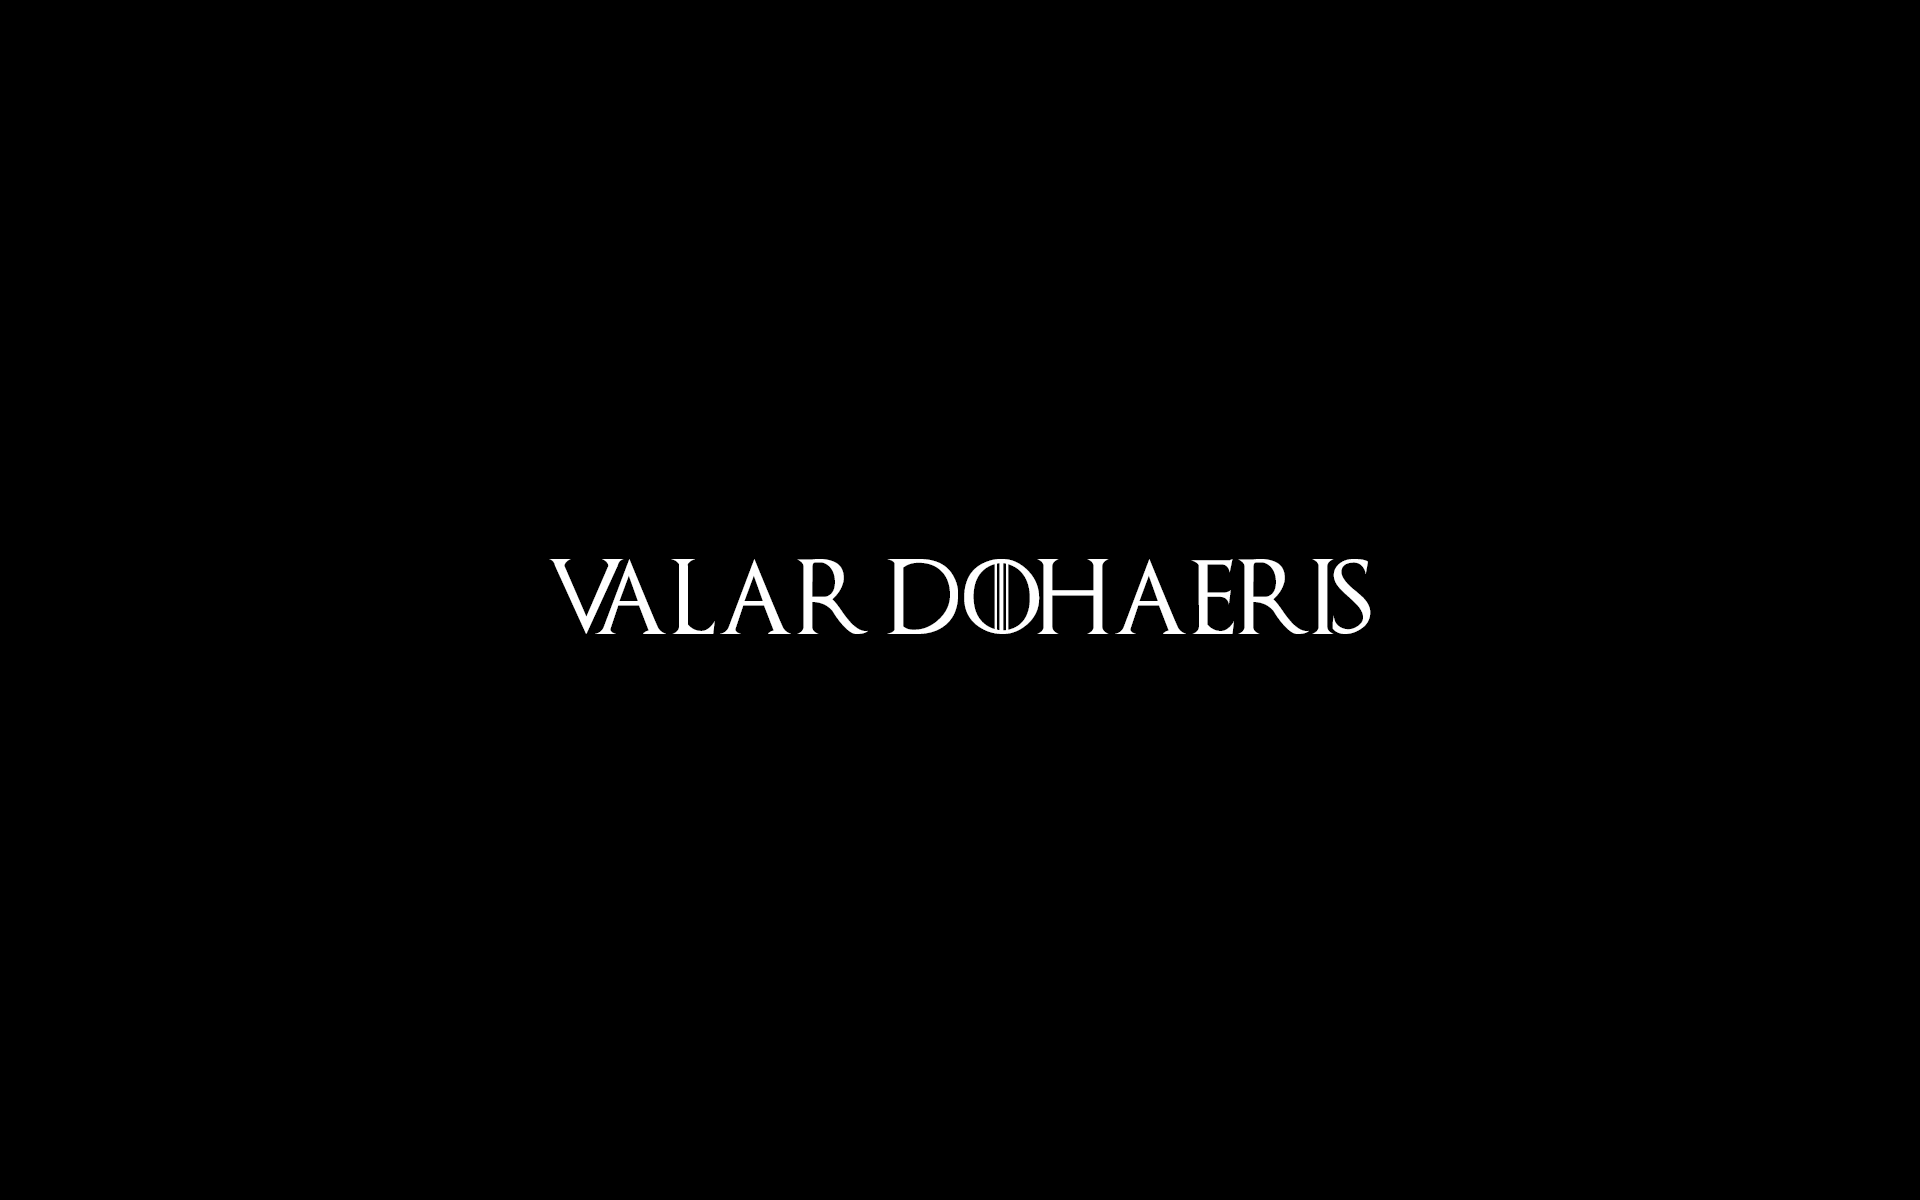 No SpoilersSimple Valar Morghulis and Valar Dohaeris wallpaper